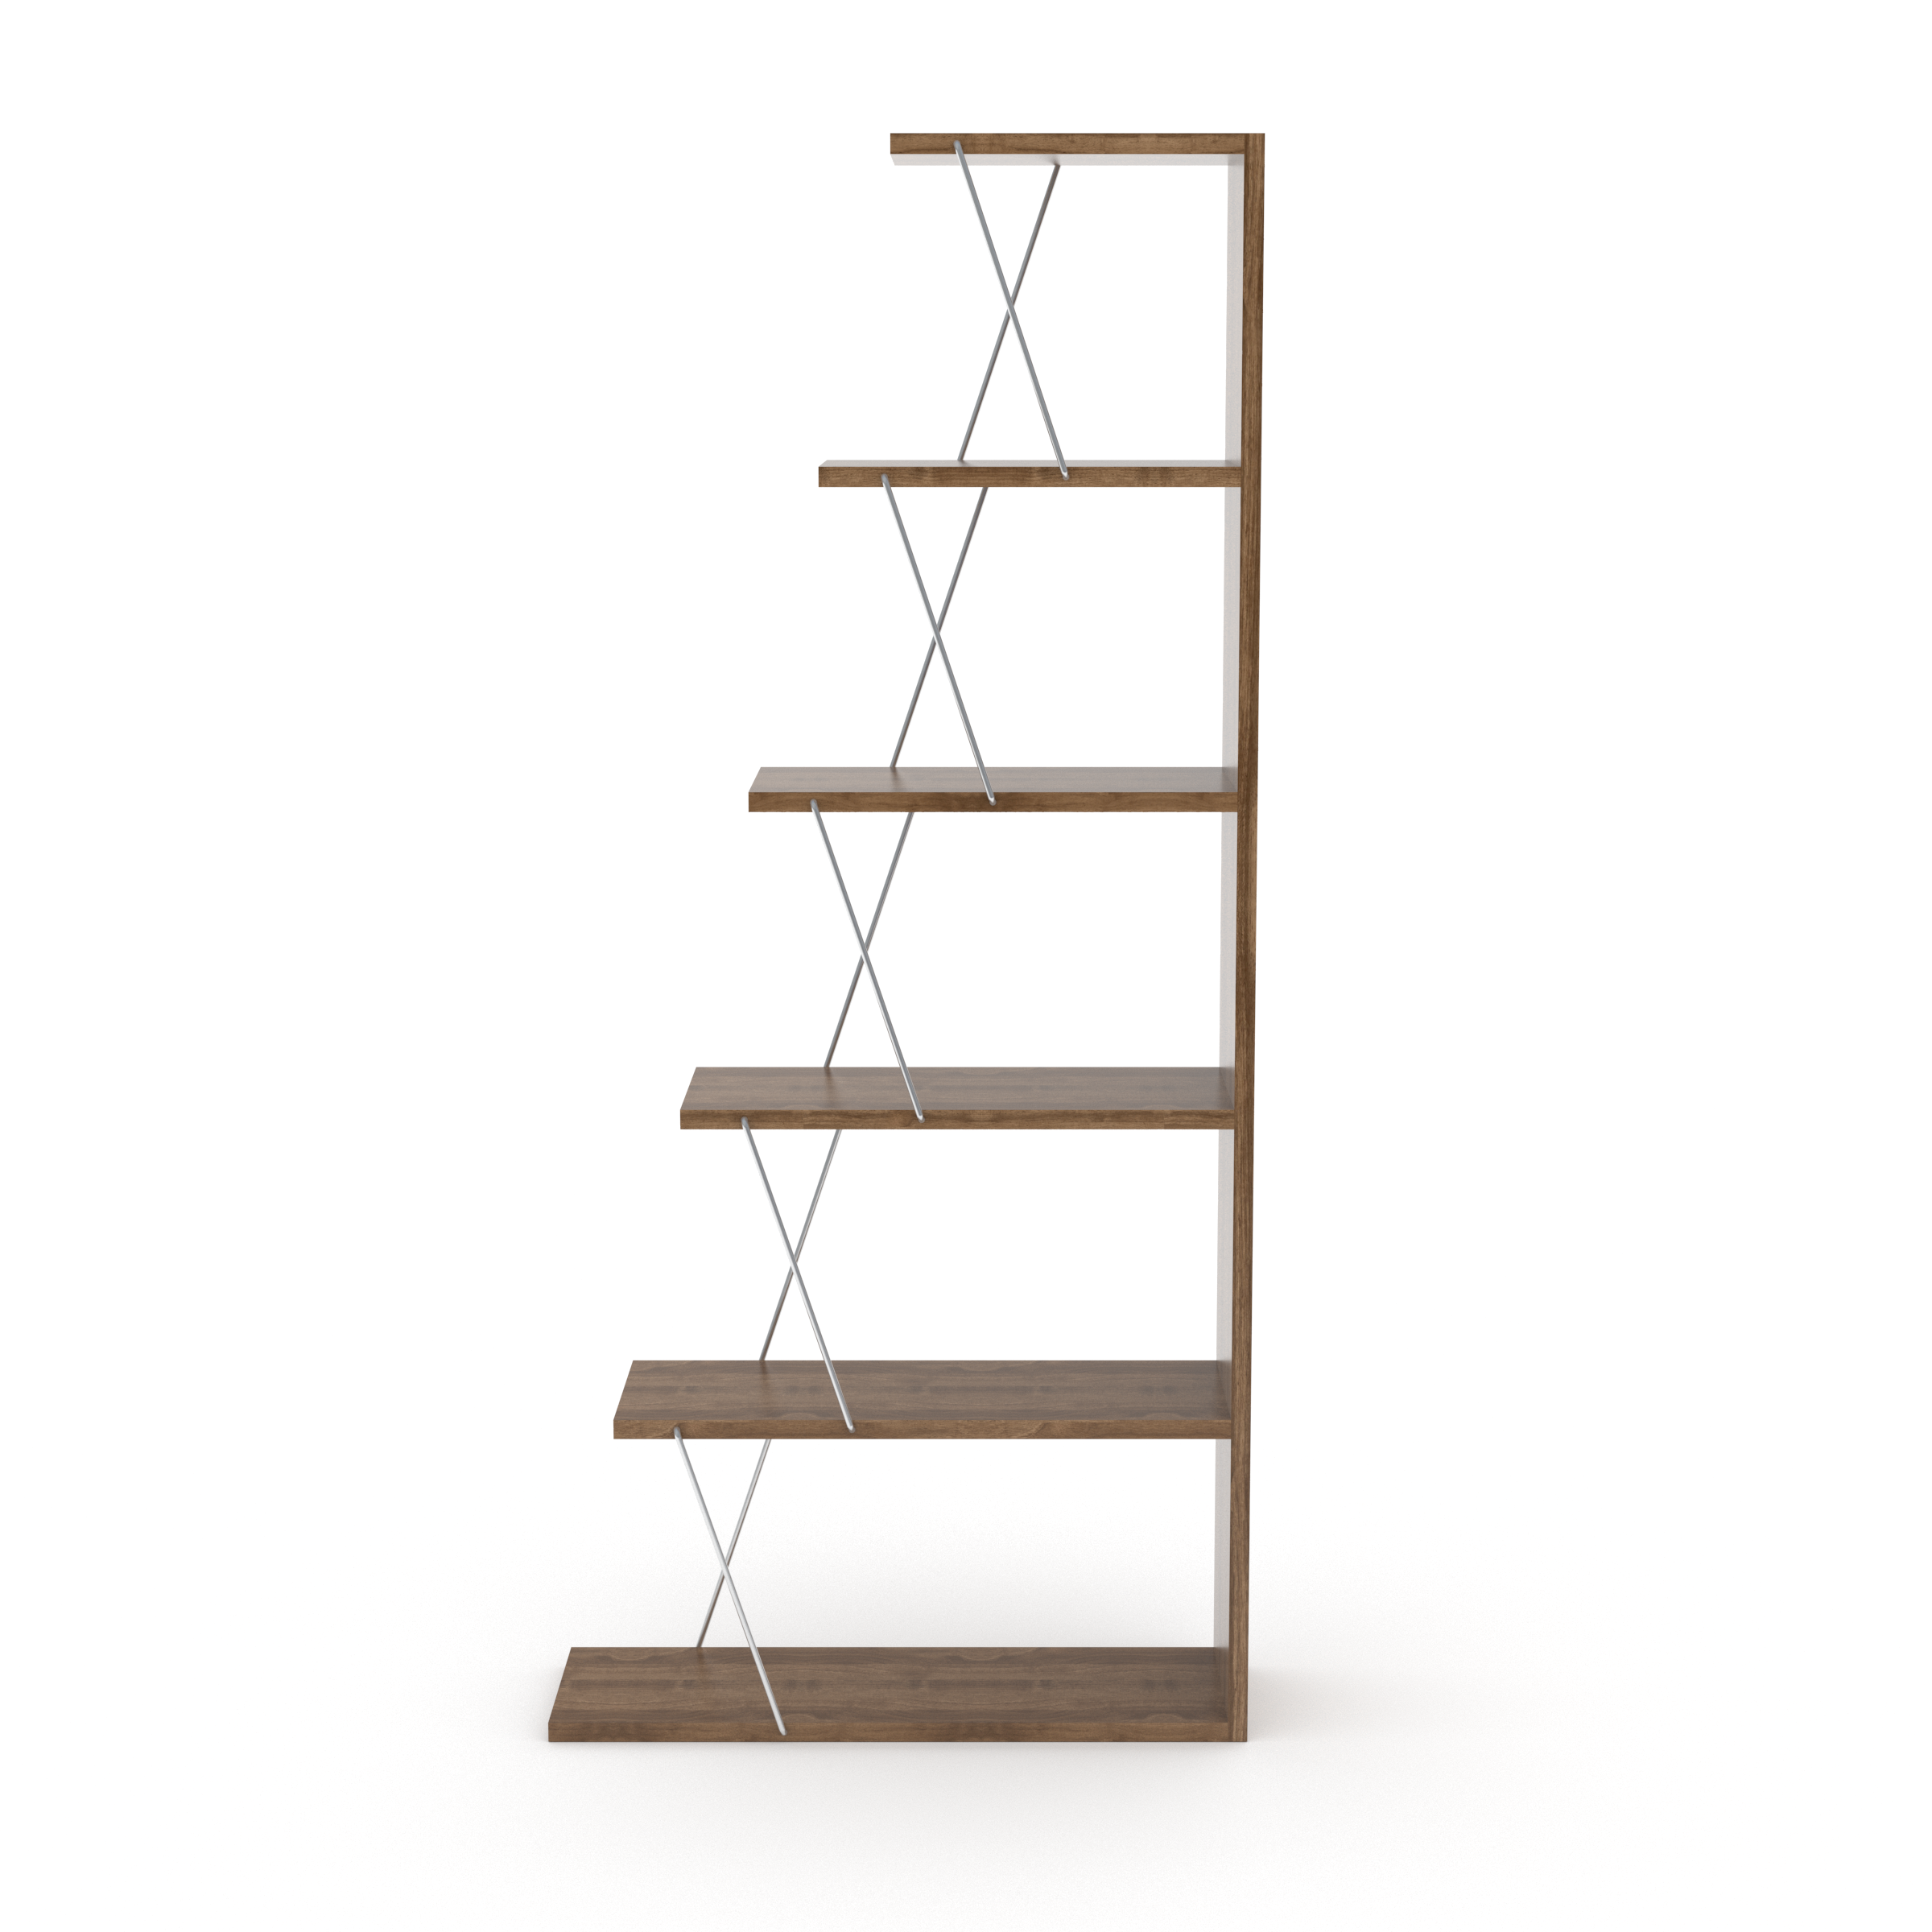 ZNTS Furnish Home Store Modern 5 Tier Ladder Bookshelf Organizers, Narrow Bookshelf for Small Spaces B02949517